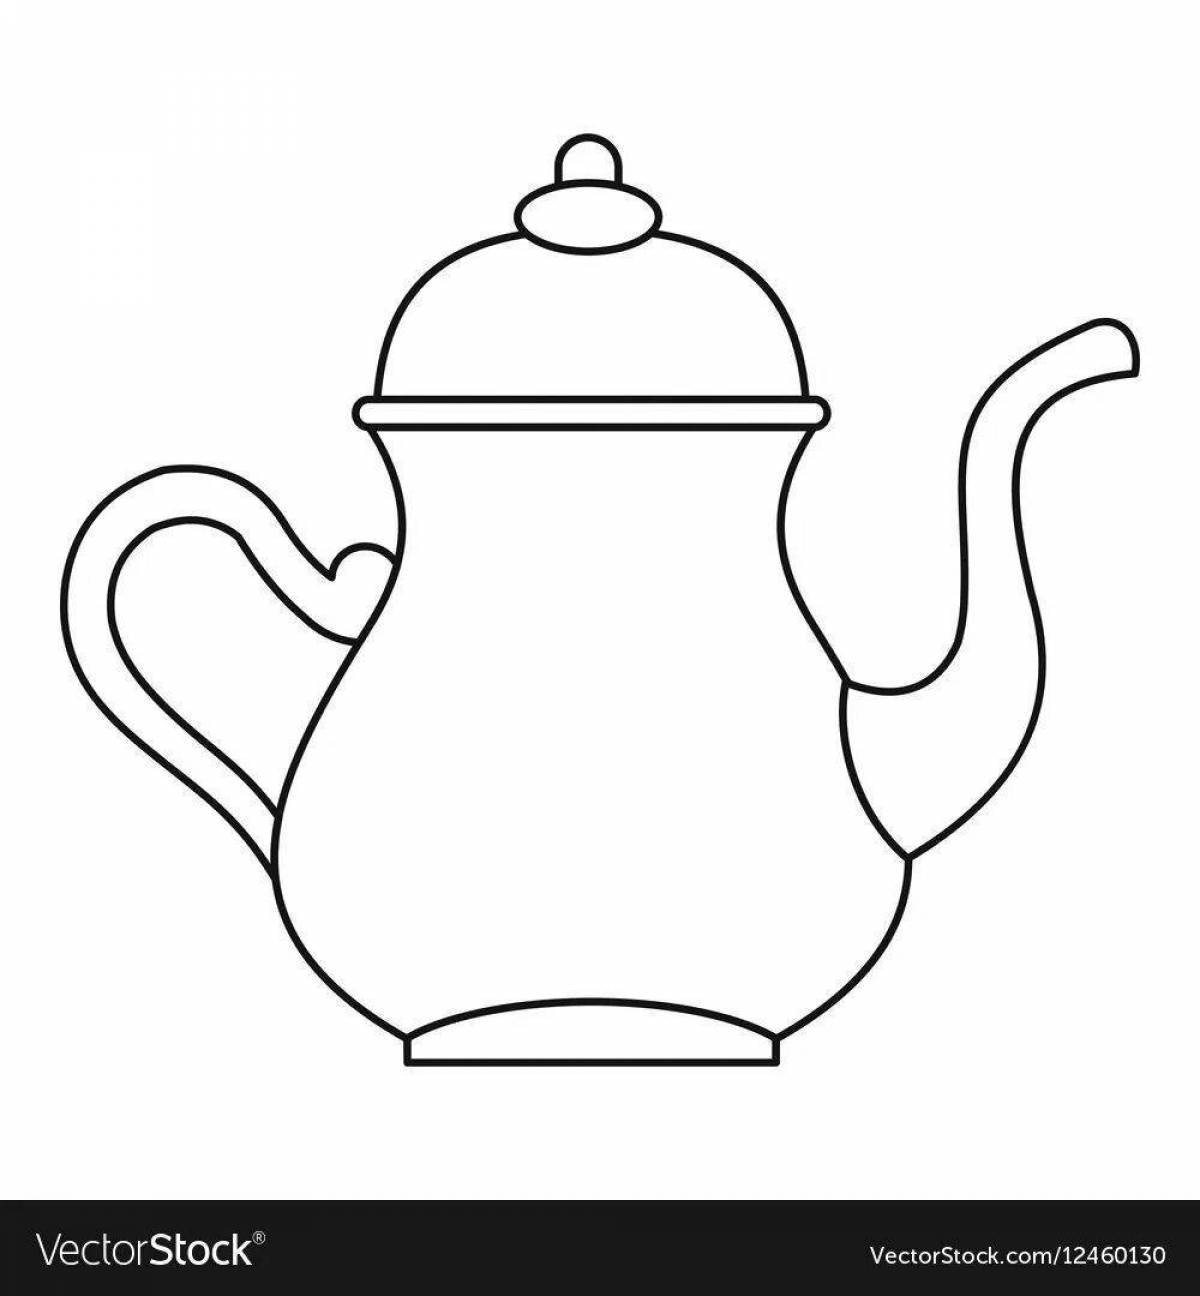 Wonderful teapot coloring page